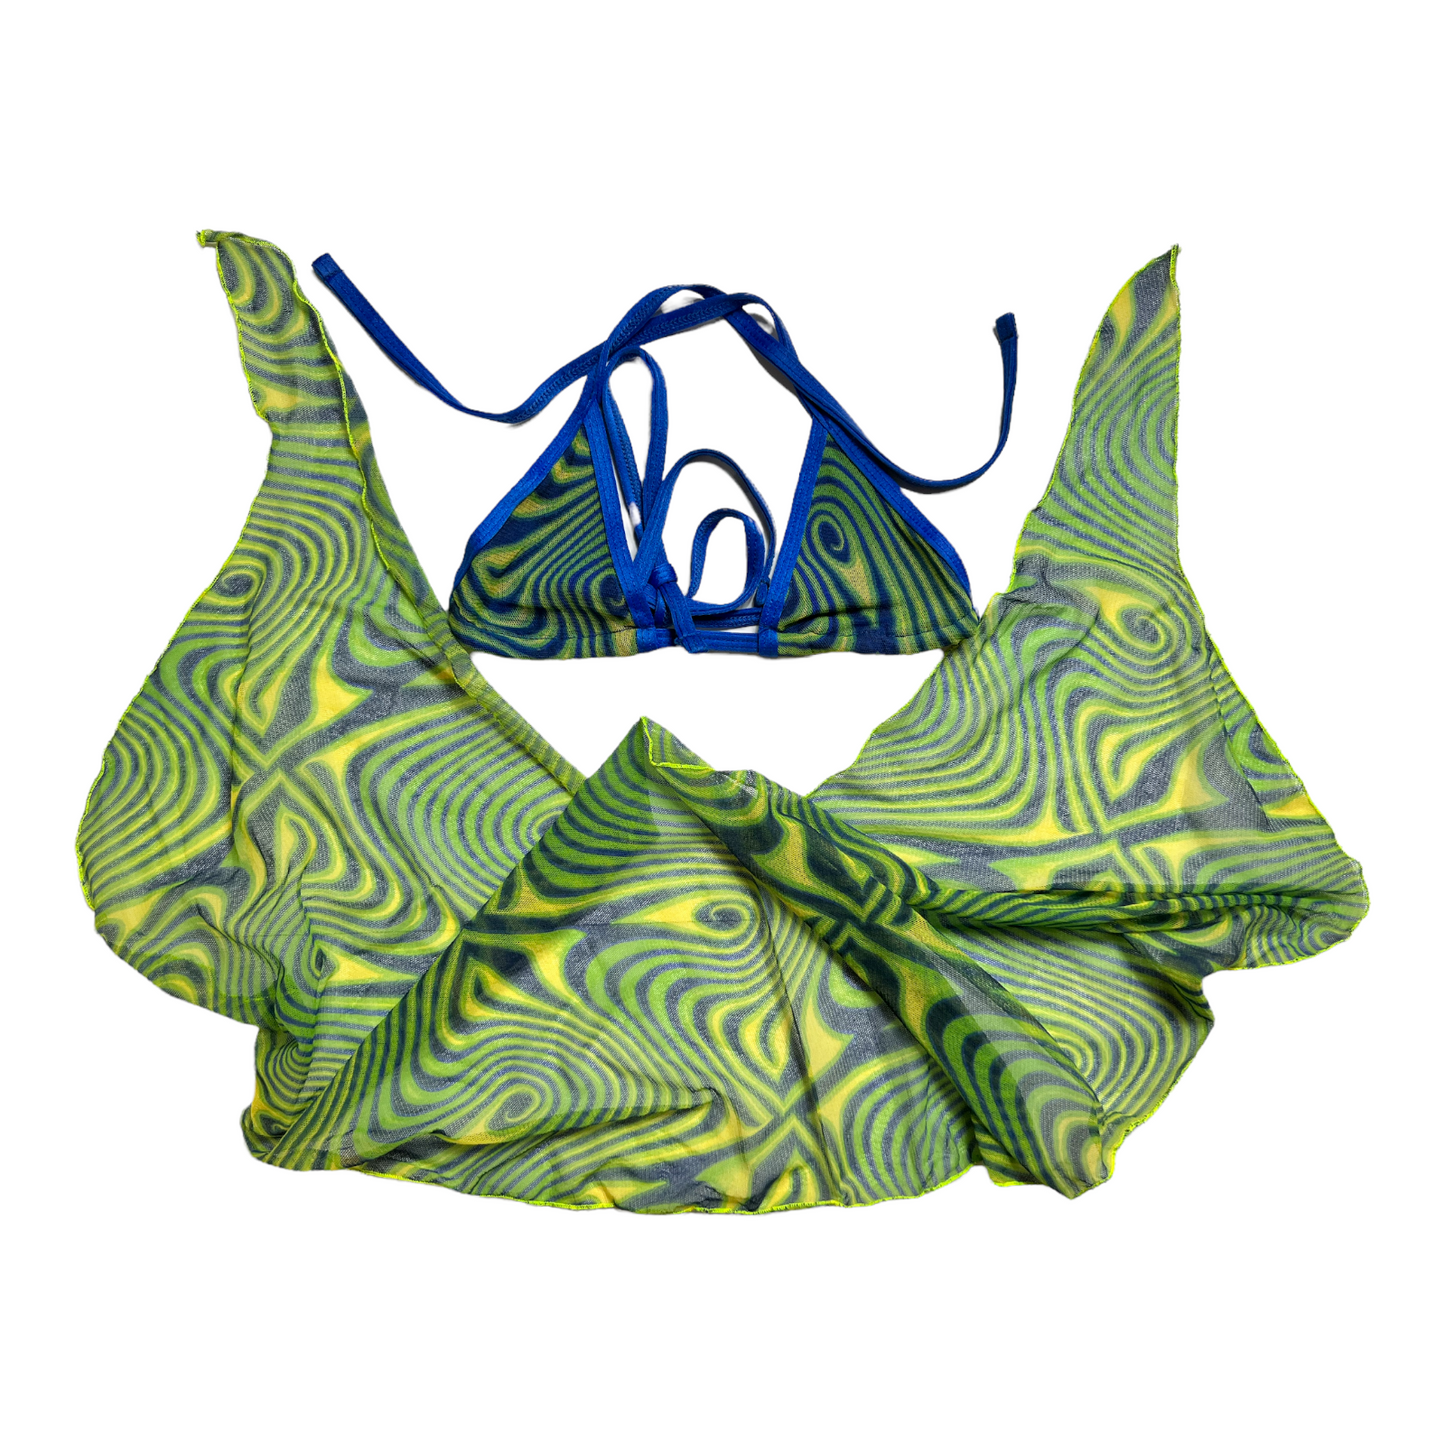 New Blue/Green Swirl Swimsuit Top with Leg Coverup size S (SwimWear) No Bottom